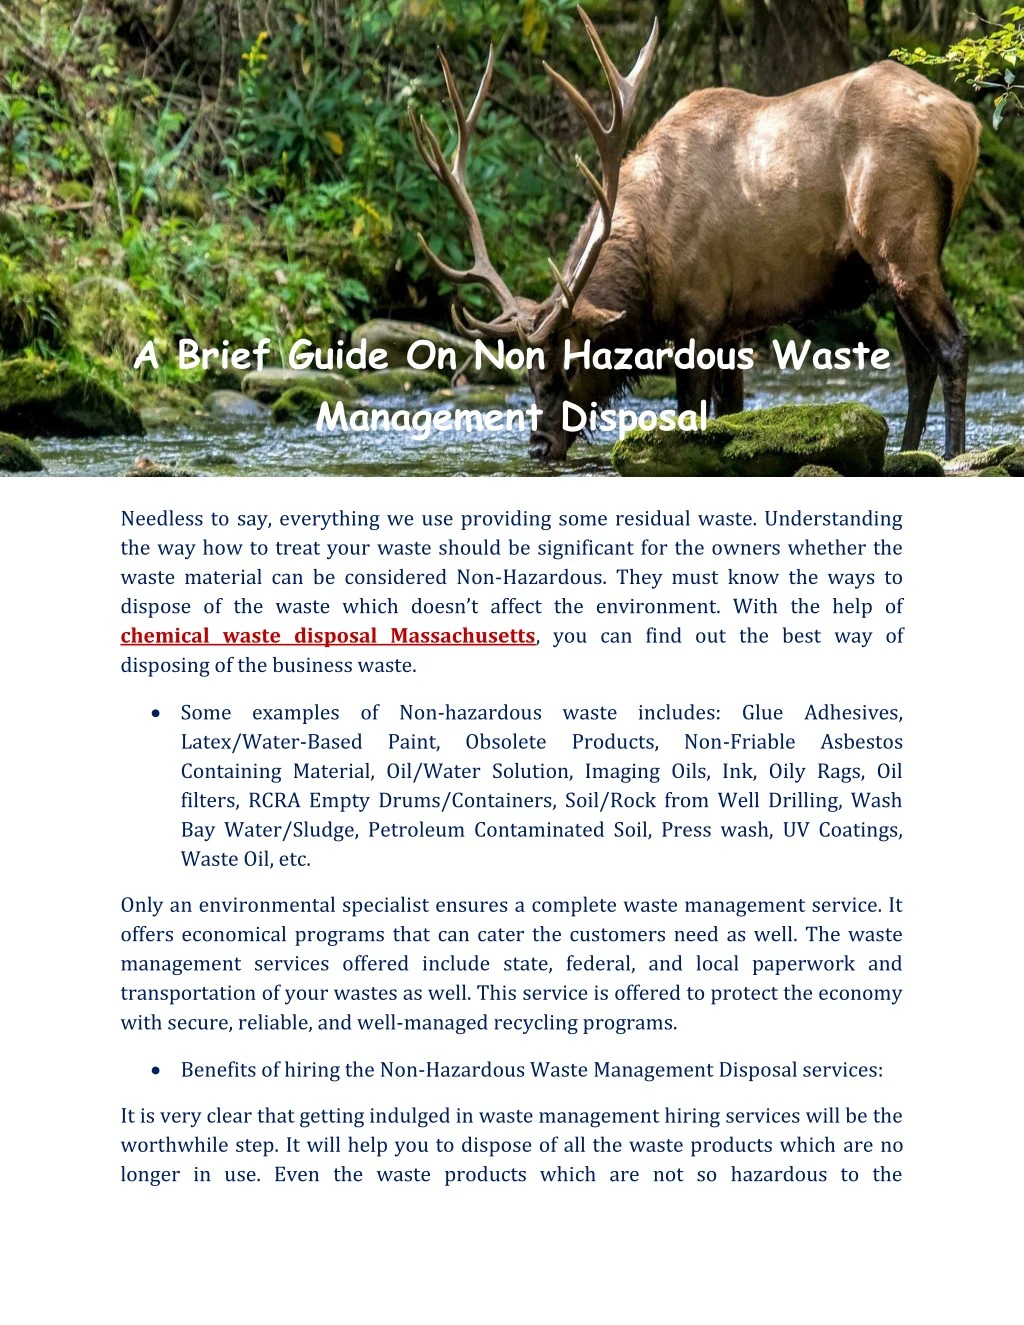 a brief guide on non hazardous waste management